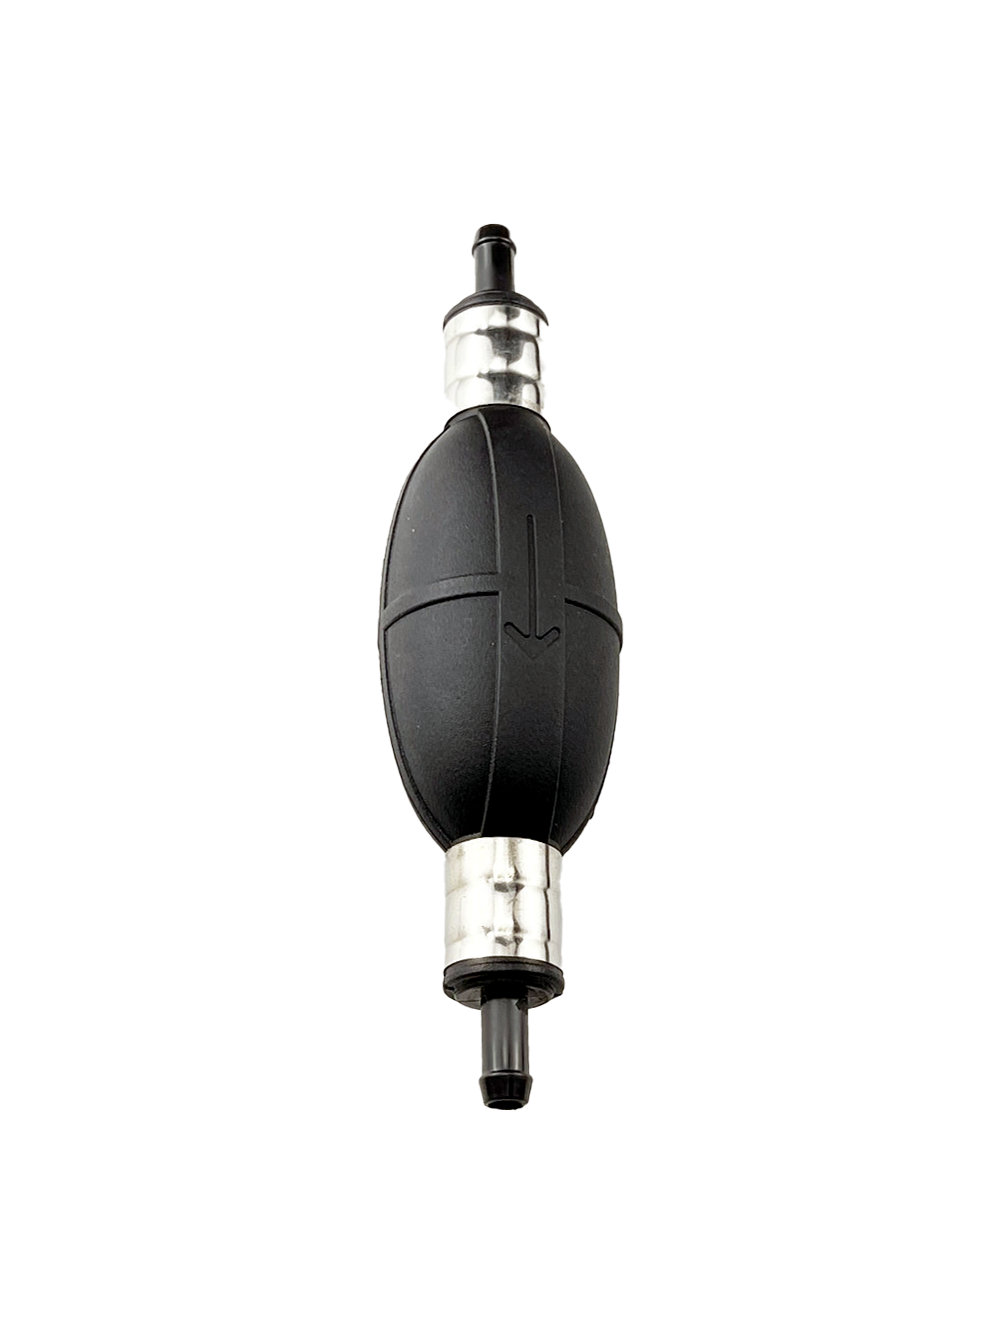 6mm 1/4 Fuel Hose Transfer Pump For Outboard Motor Primer Bulb Rubber Manual